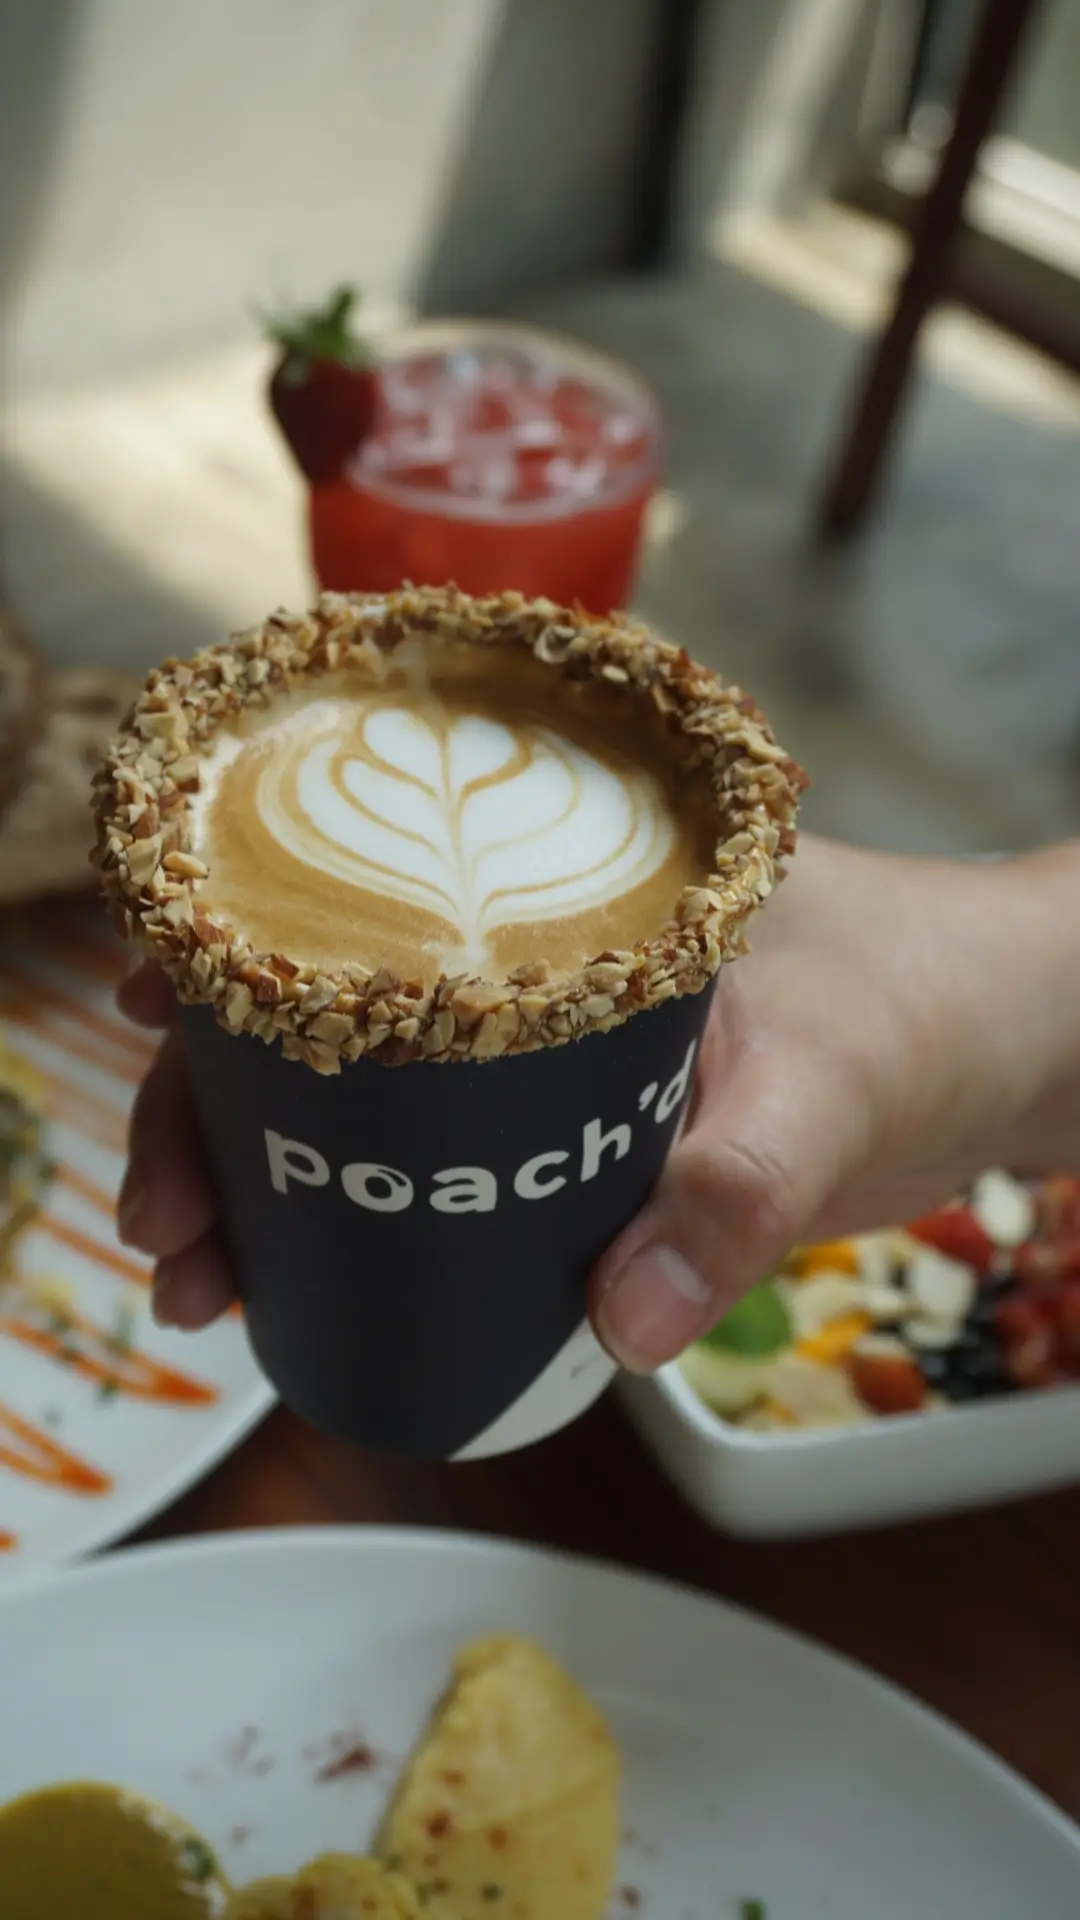 Poach'd Brunch & Coffee House